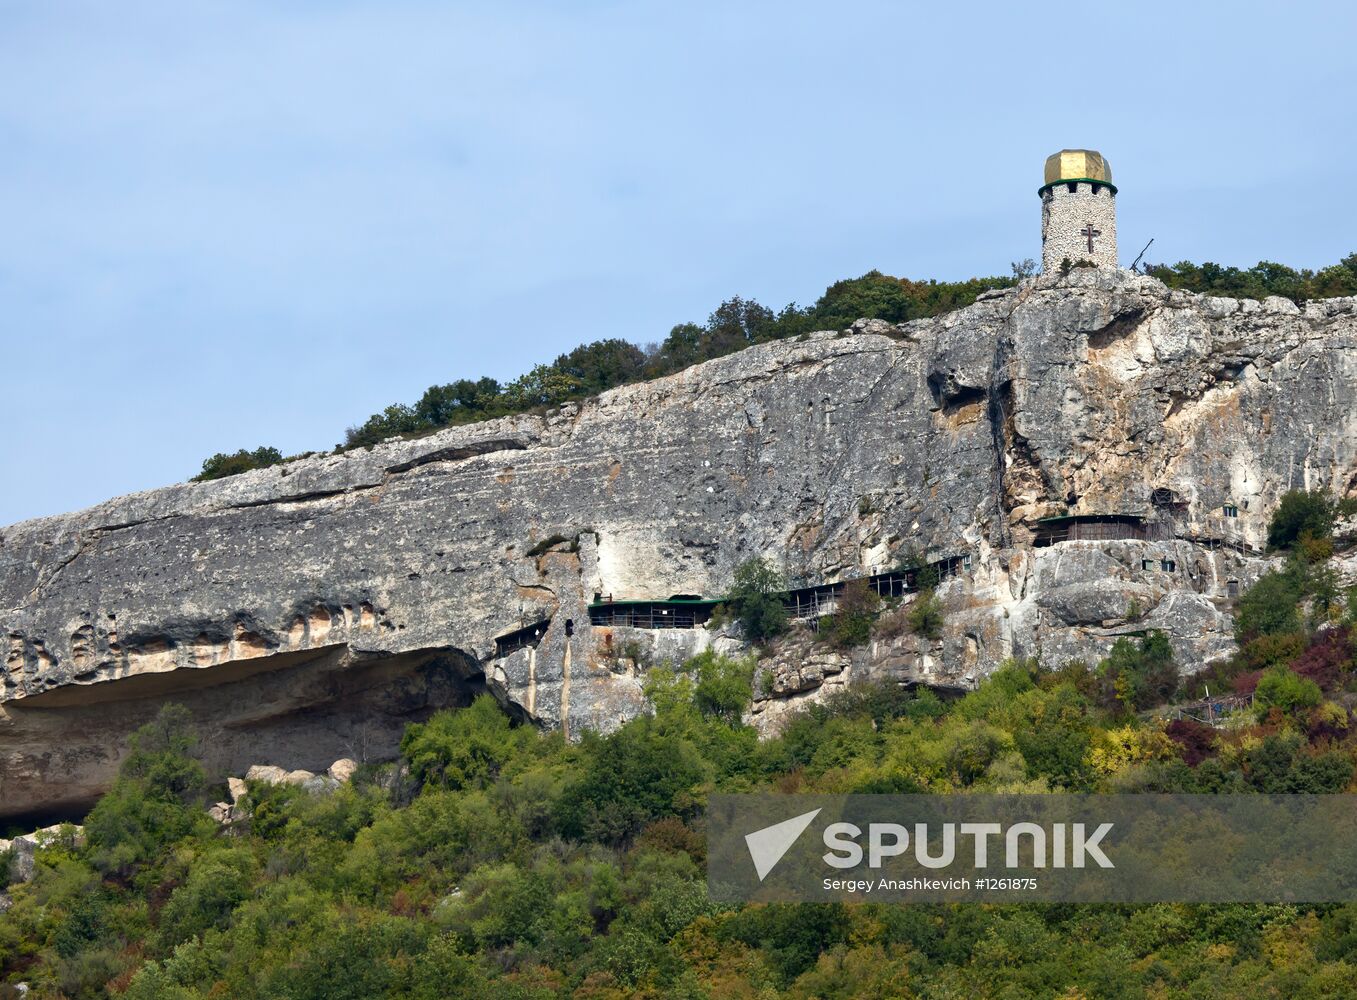 Shuldan cave monastery in Crimea